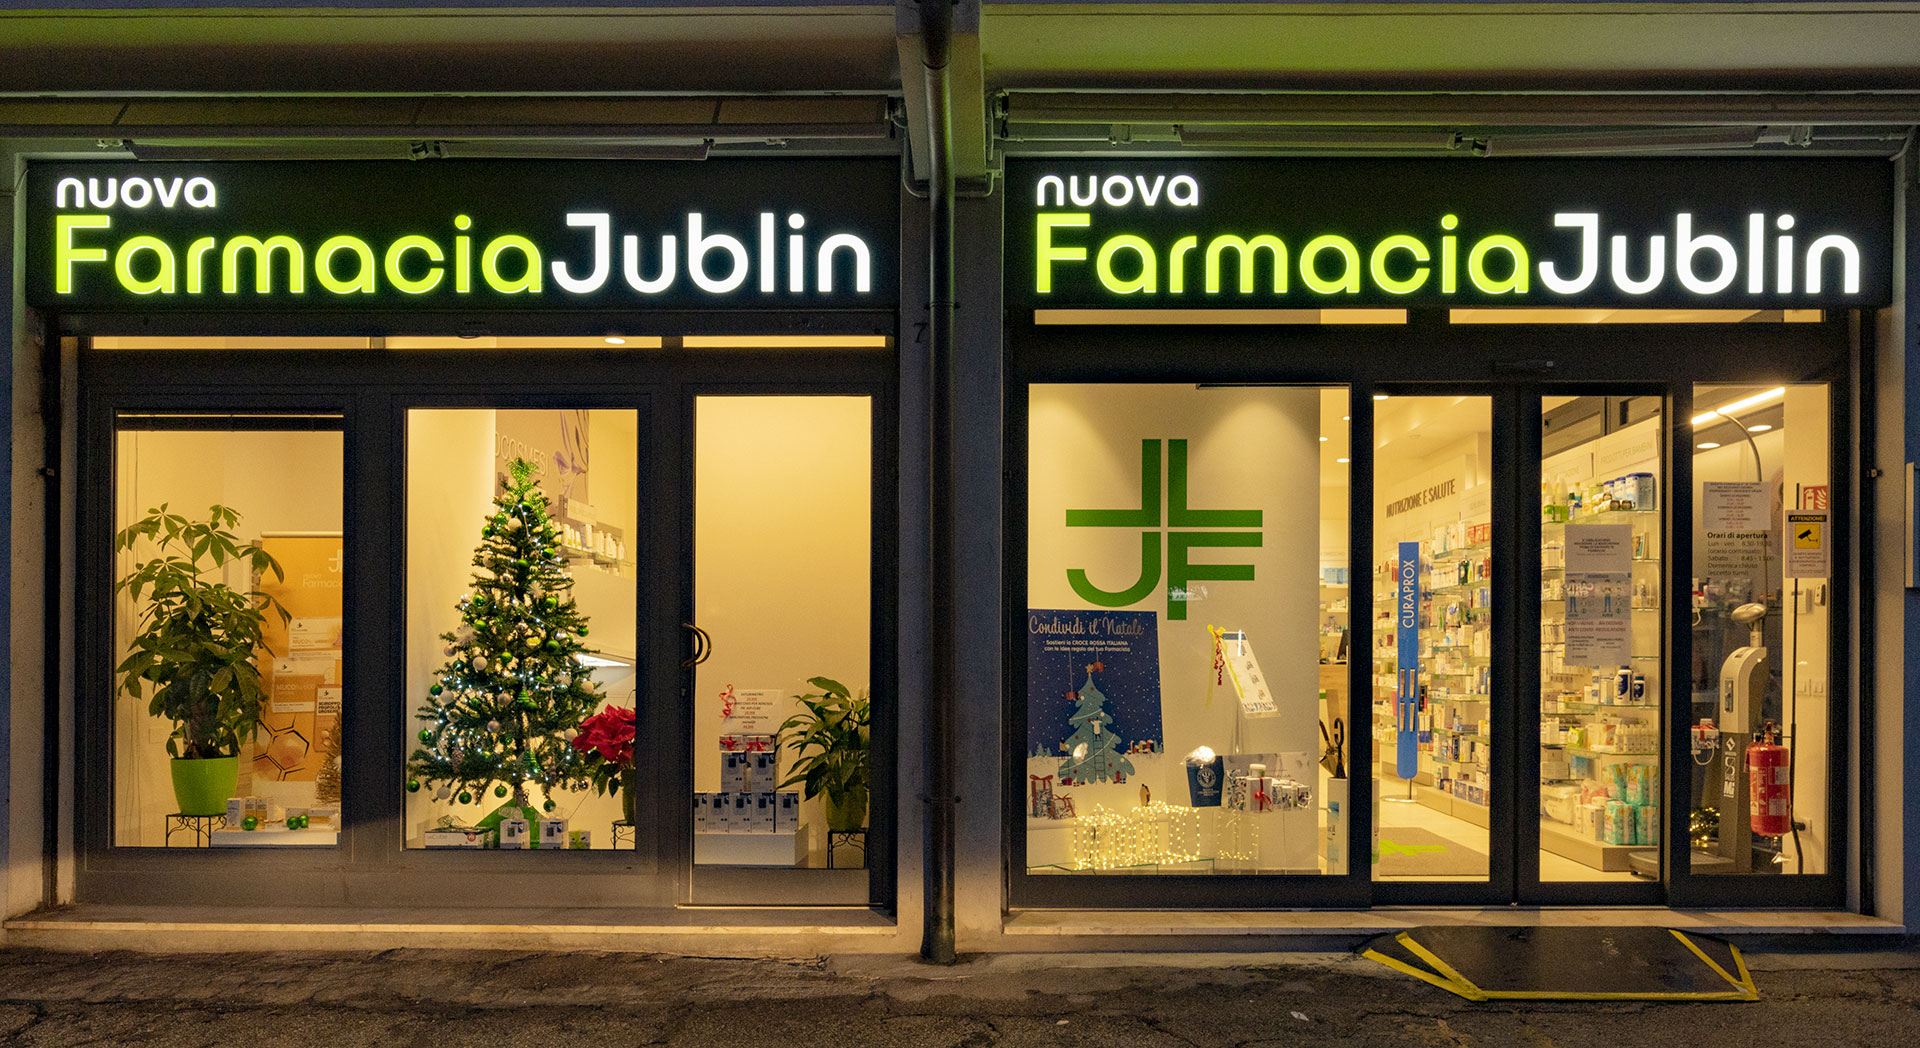 Nuova Farmacia Jublin via Bologna, 78 44122 Ferrara